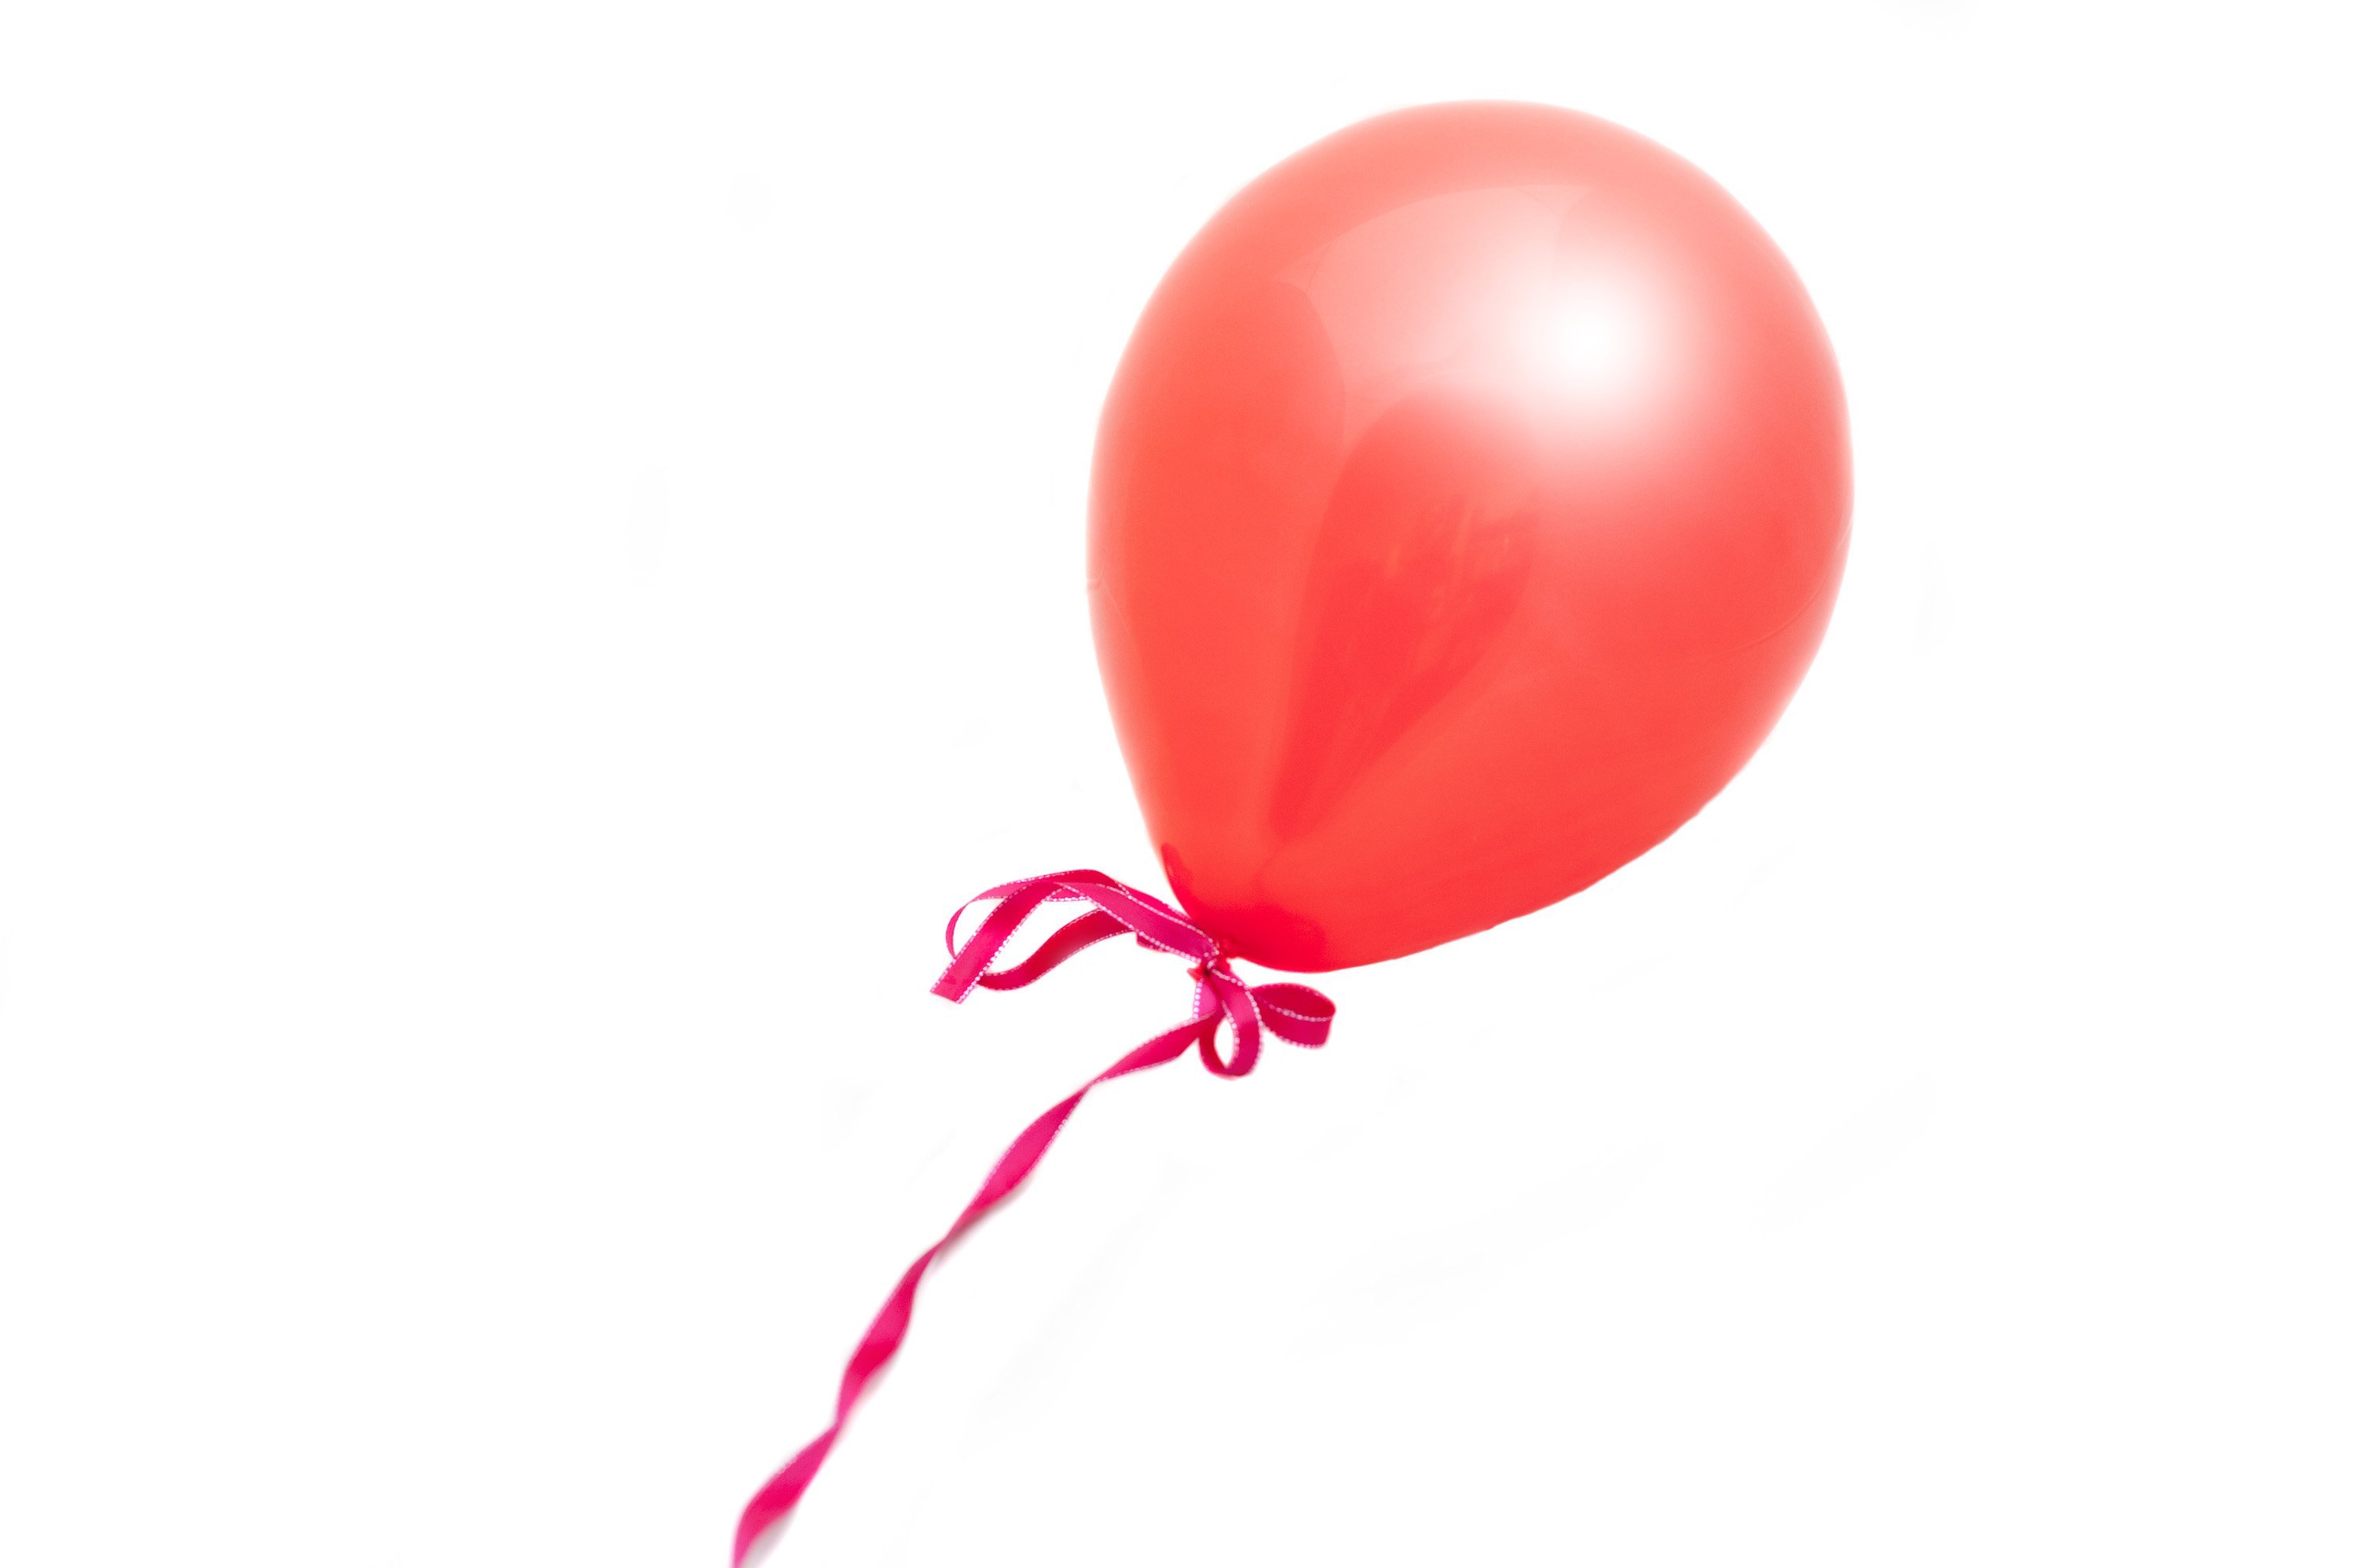 Картинка шар на прозрачном фоне. Воздушный шарик. Красный воздушный шарик. Воздушные шарики на прозрачном фоне. Воздушный Шарарик на белом фоне.